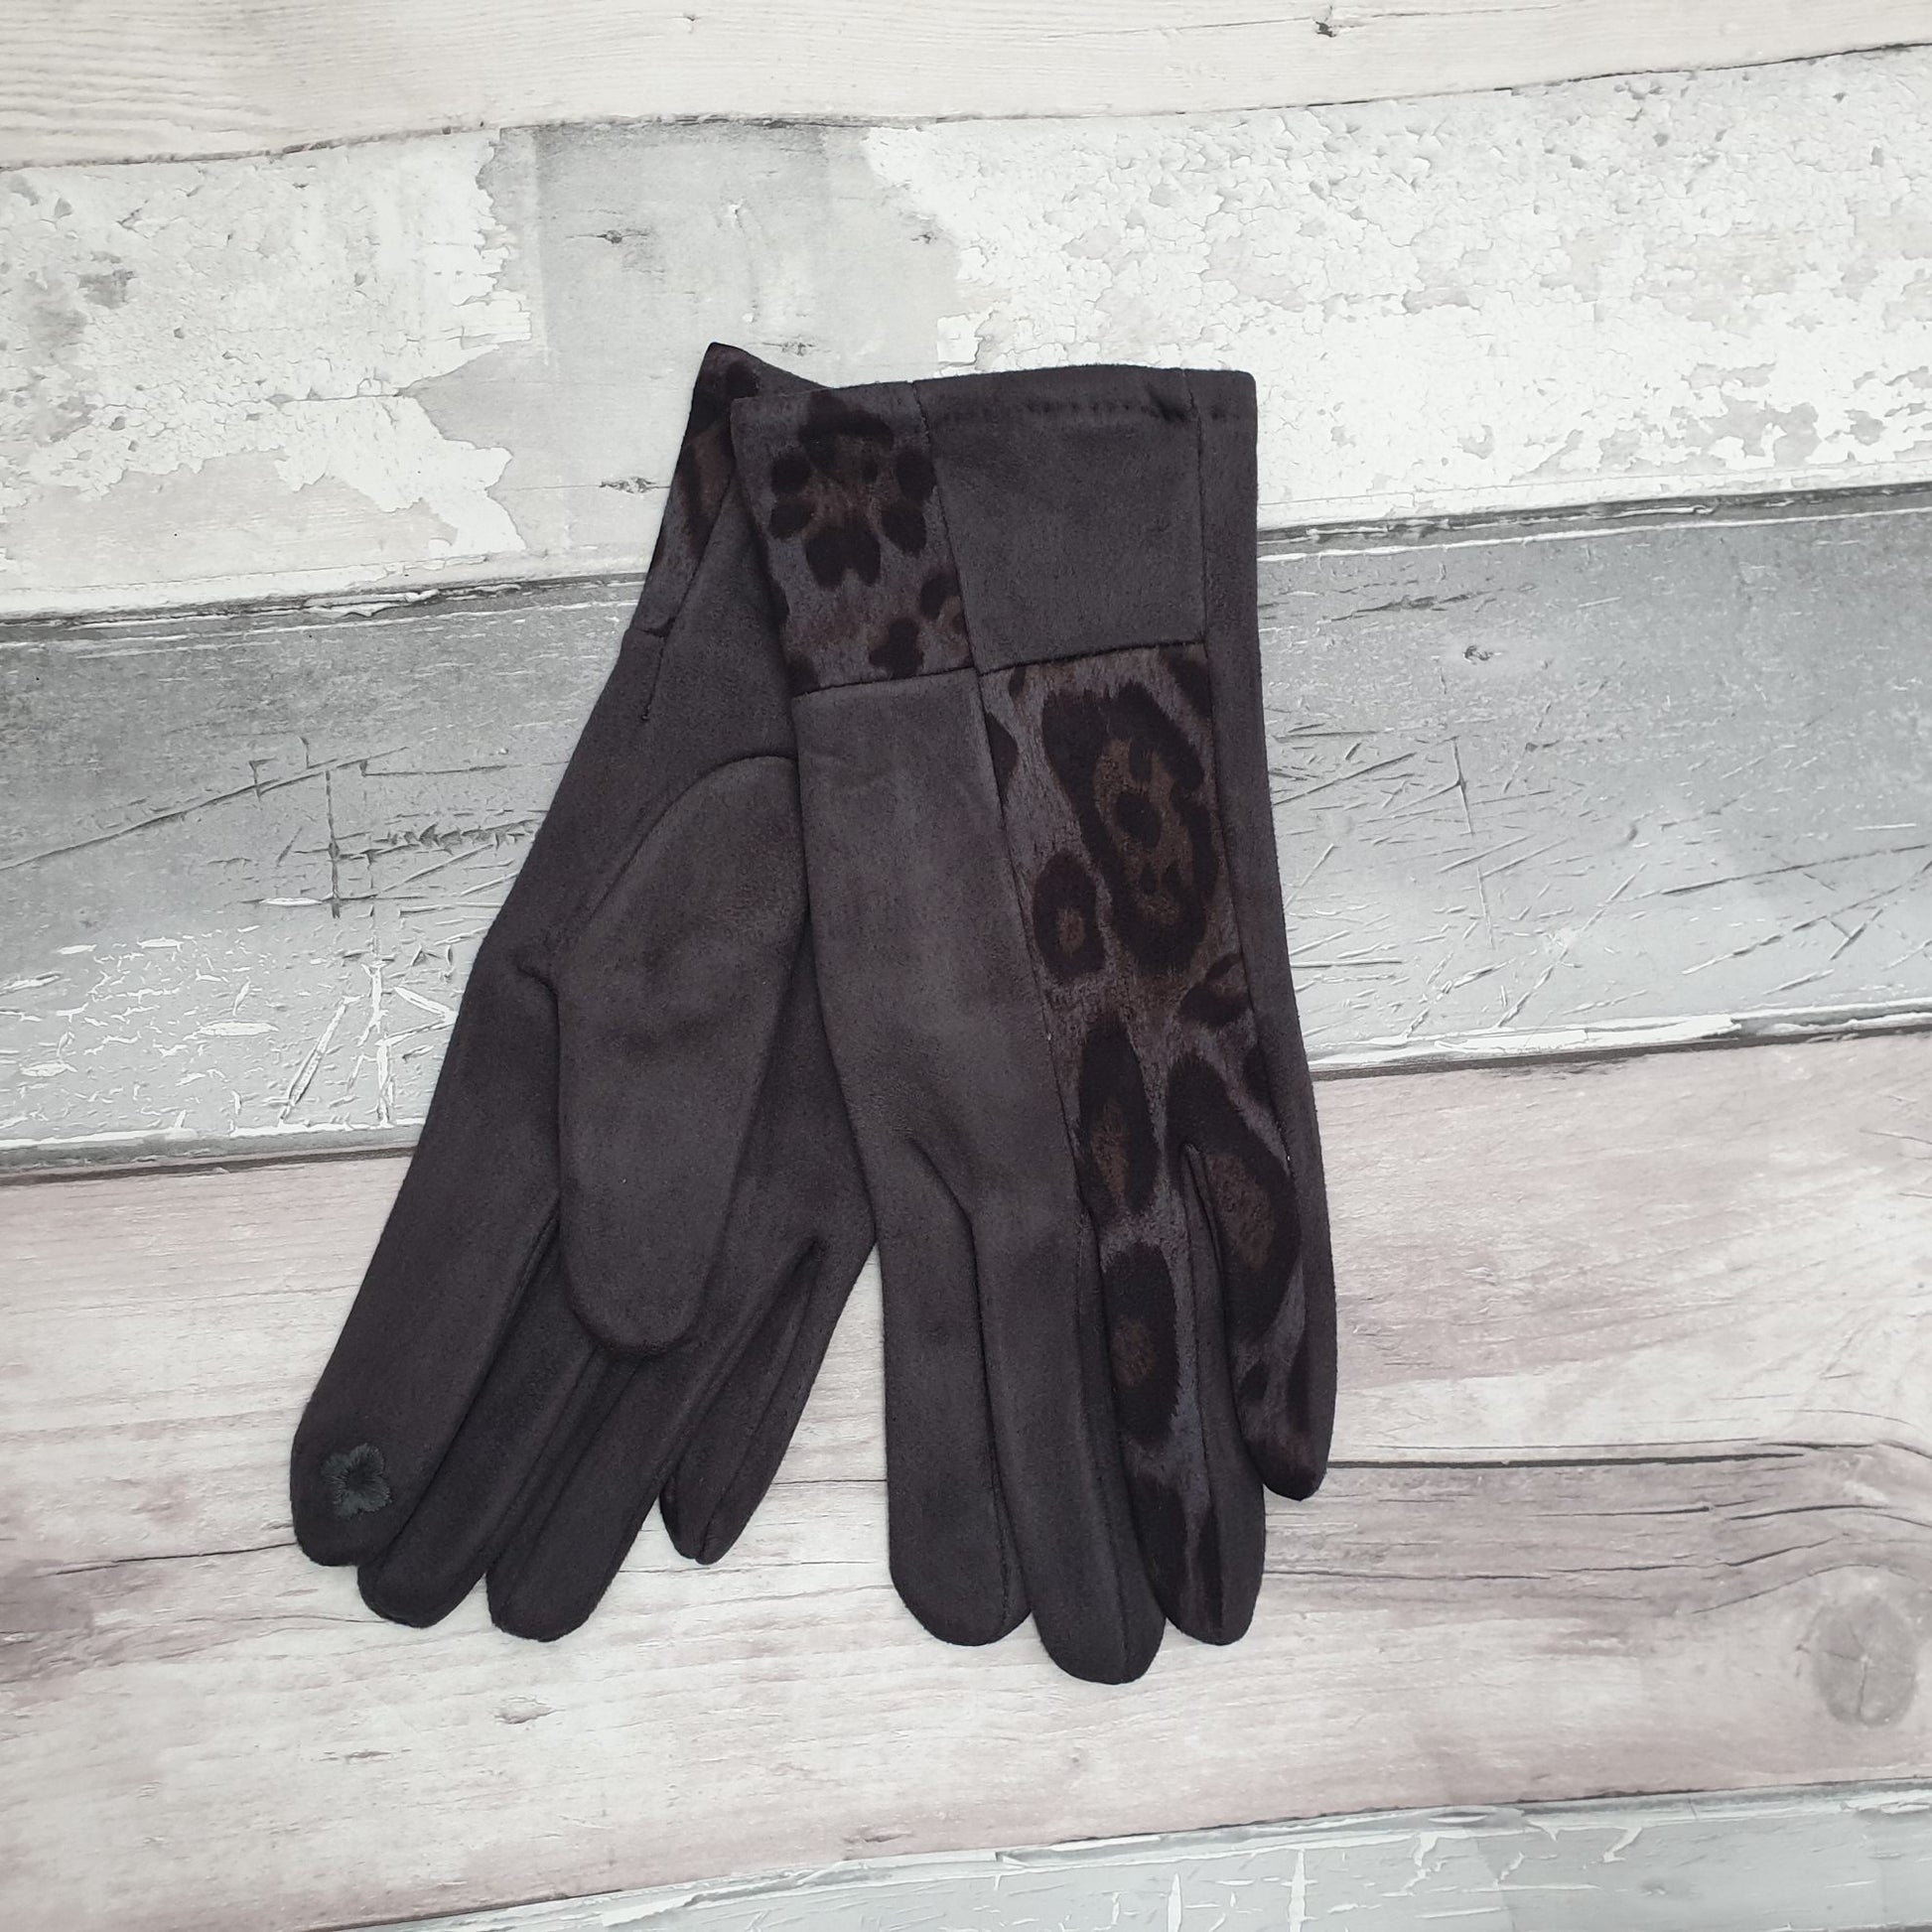 Dark grey gloves with leopard print panels.